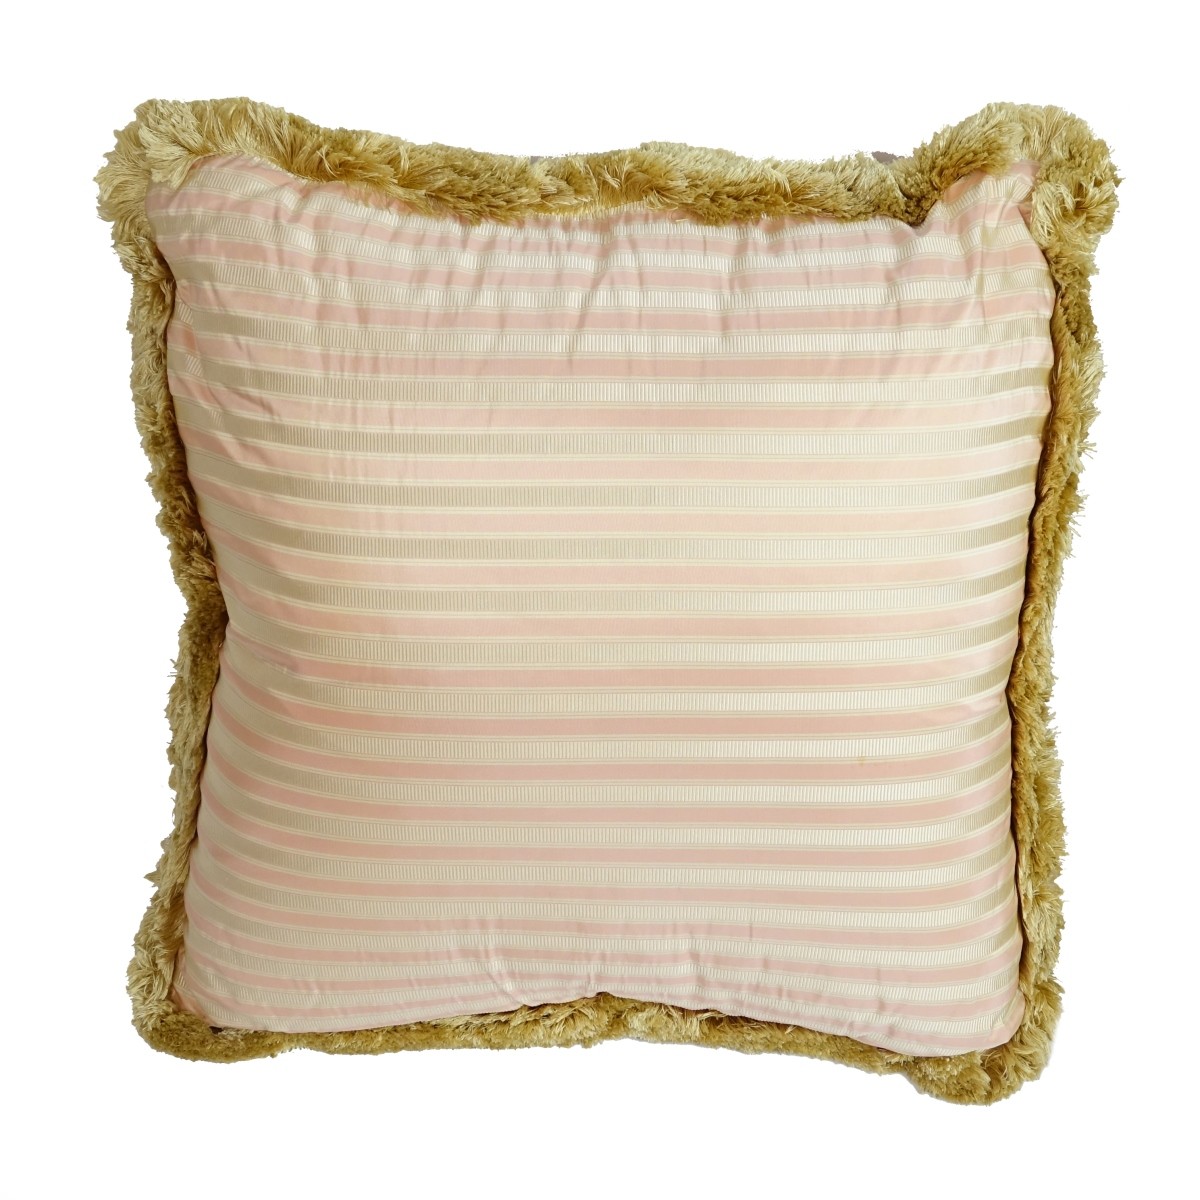 Three (3) Scalamandre Silk Pillows